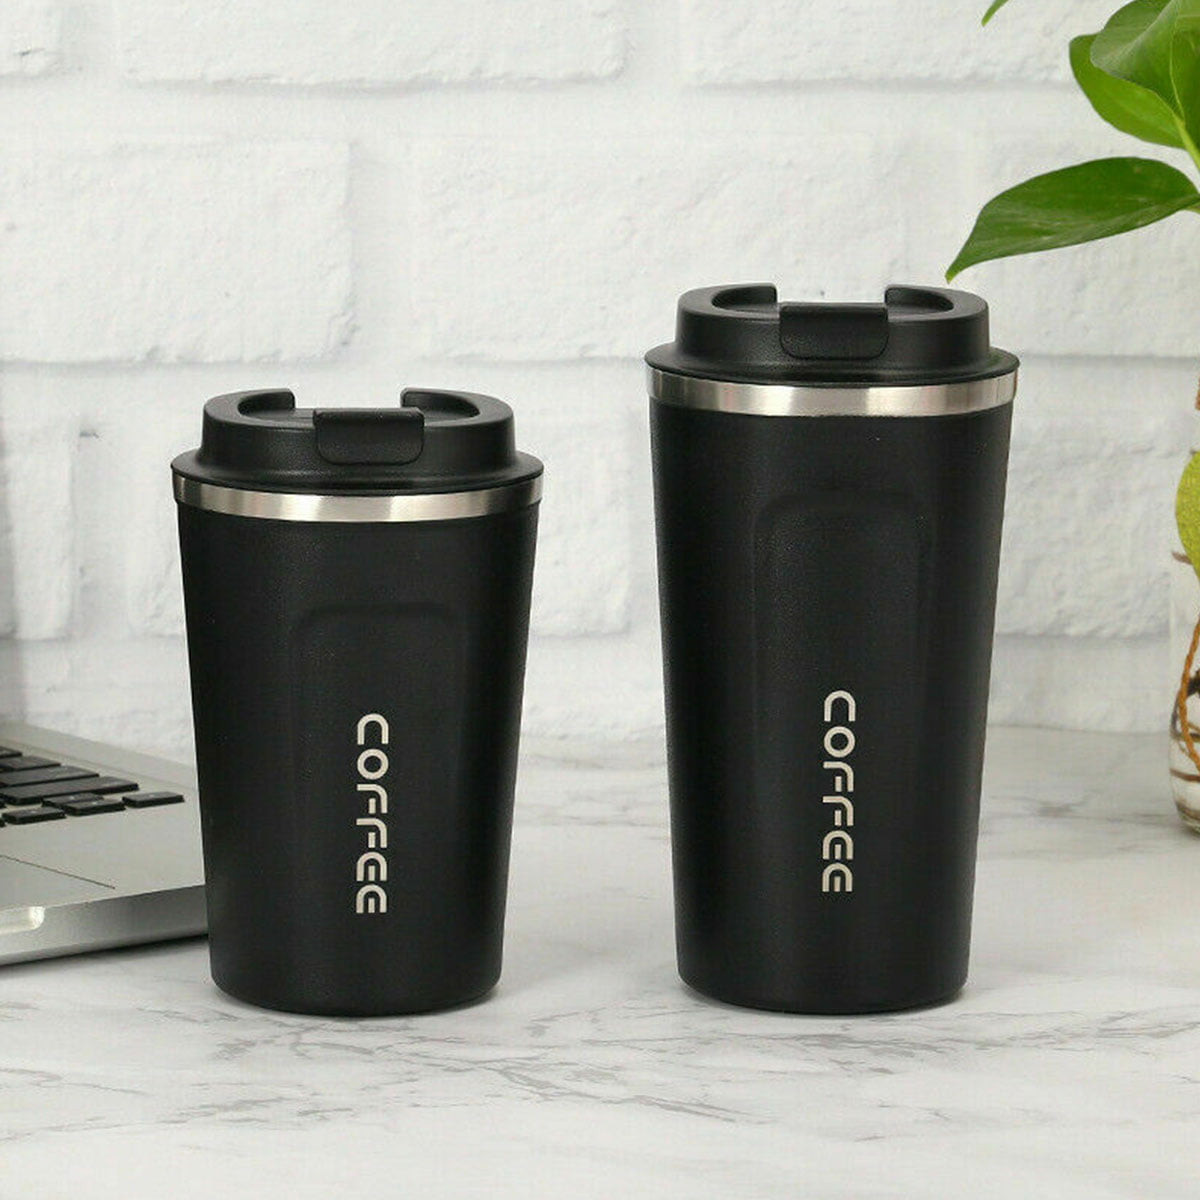 Idoker Coffee Mug Insulated Coffee Mug with Handle Stainless Steel Coffee Mug with Lip Reusable Insulated Mug Coffee Tumbler Thermos Tea Cups 12oz, 35